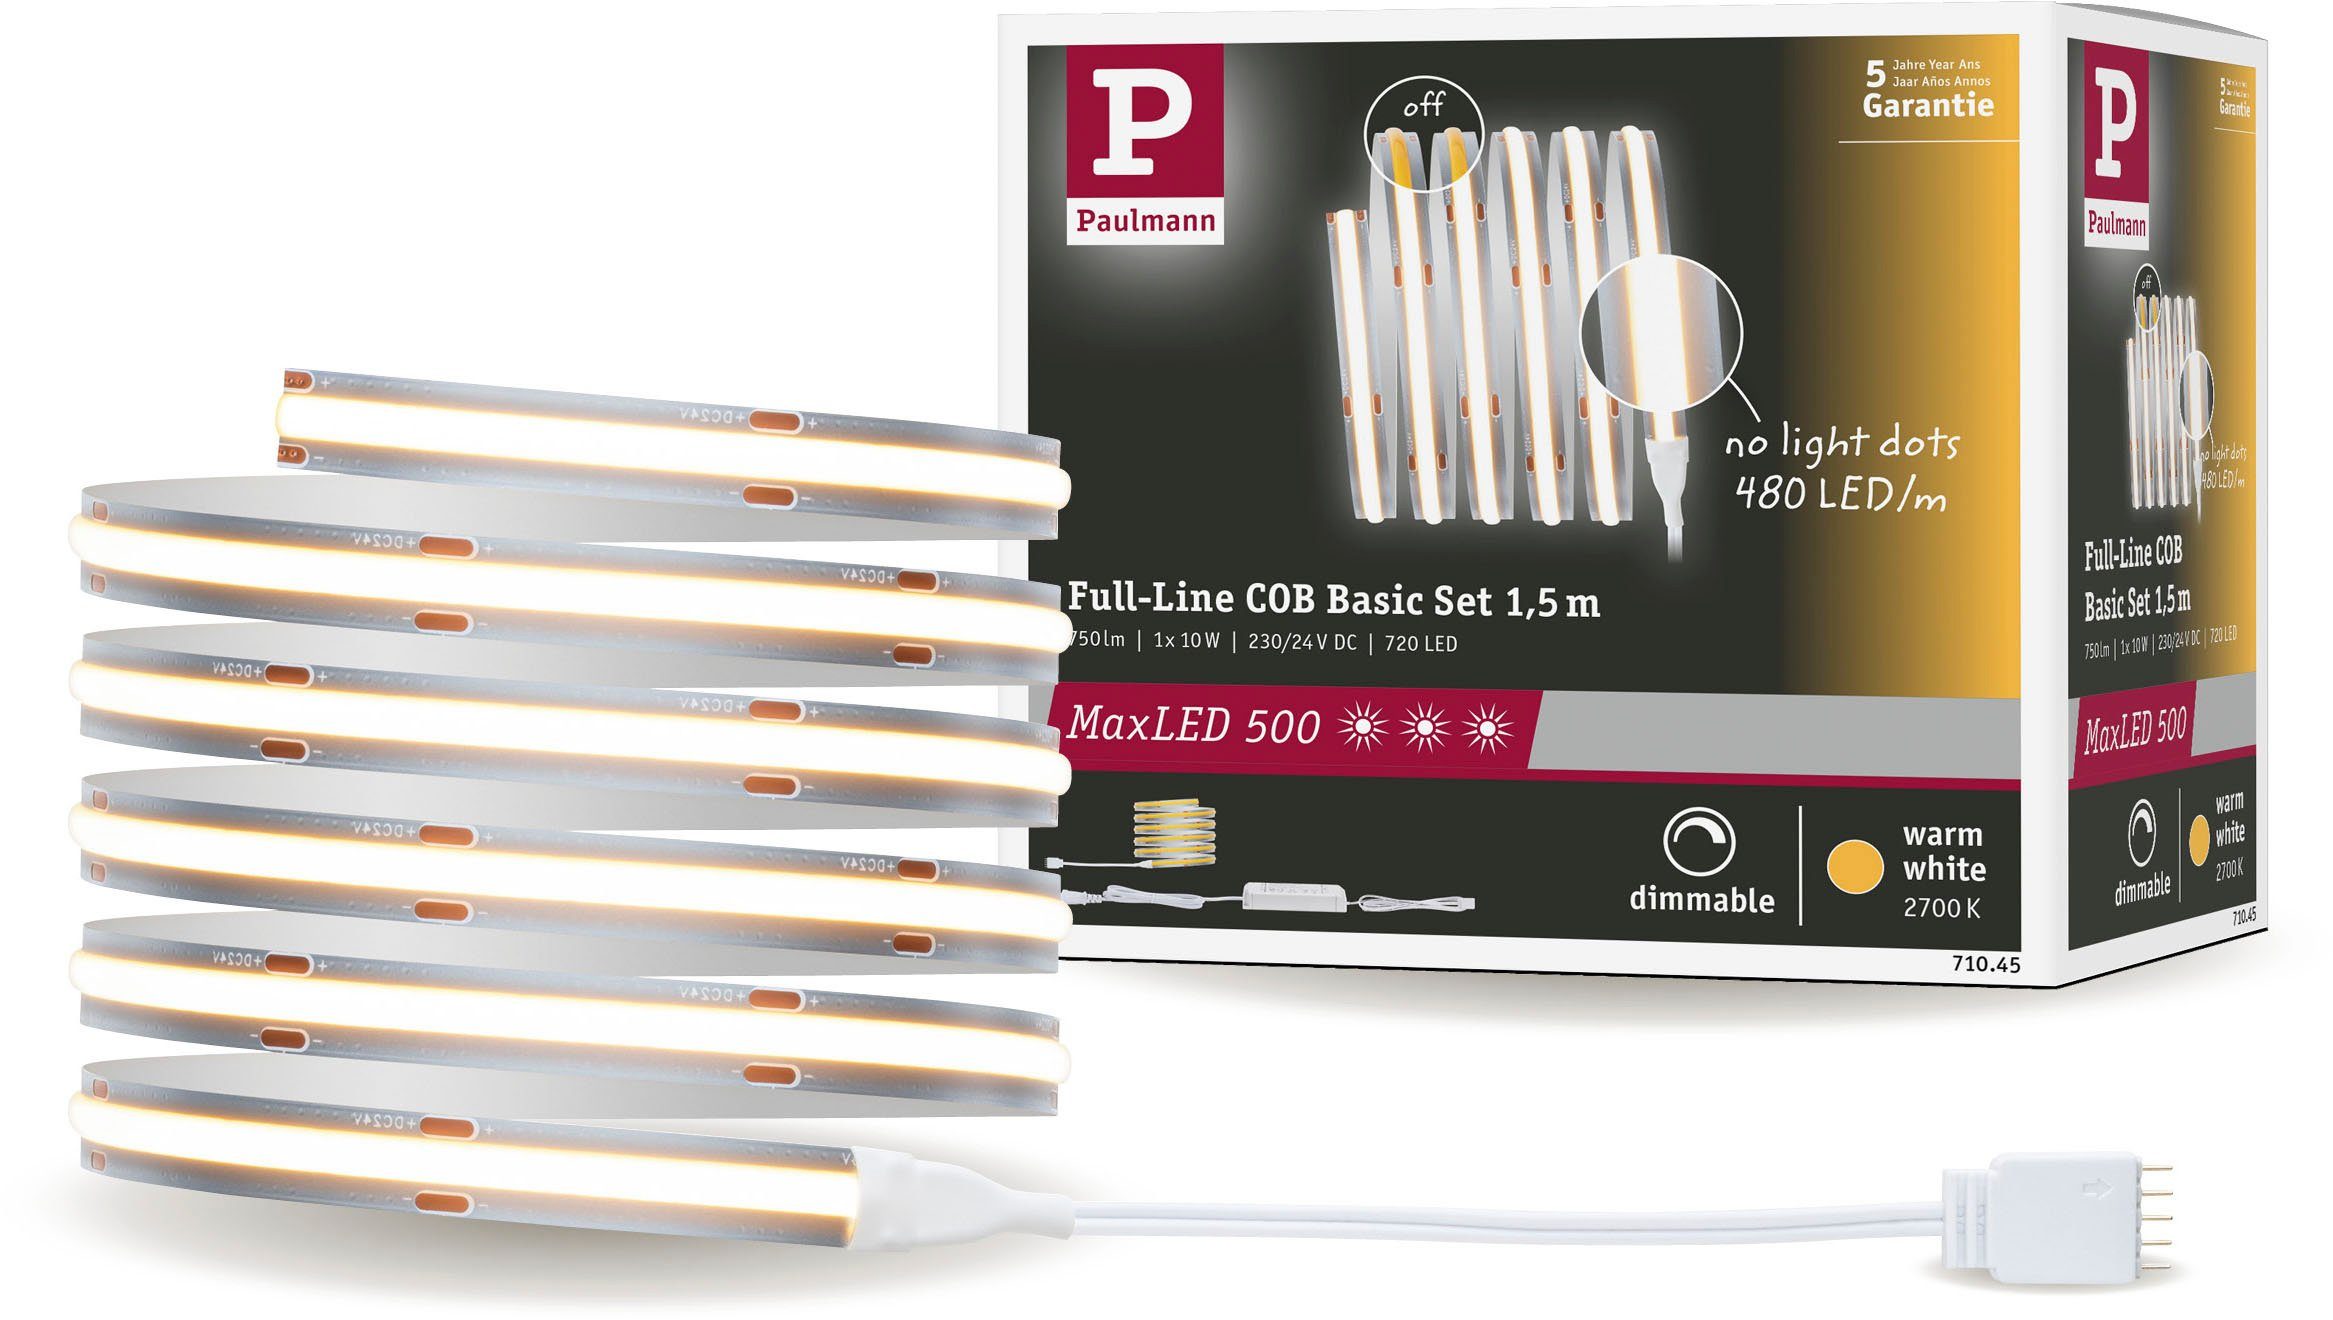 Paulmann LED-Streifen 750lm warmweiß10W 1-flammig, Basisset Basisset 480LED 1,5m, COB MaxLED Full-Line 500 2700K